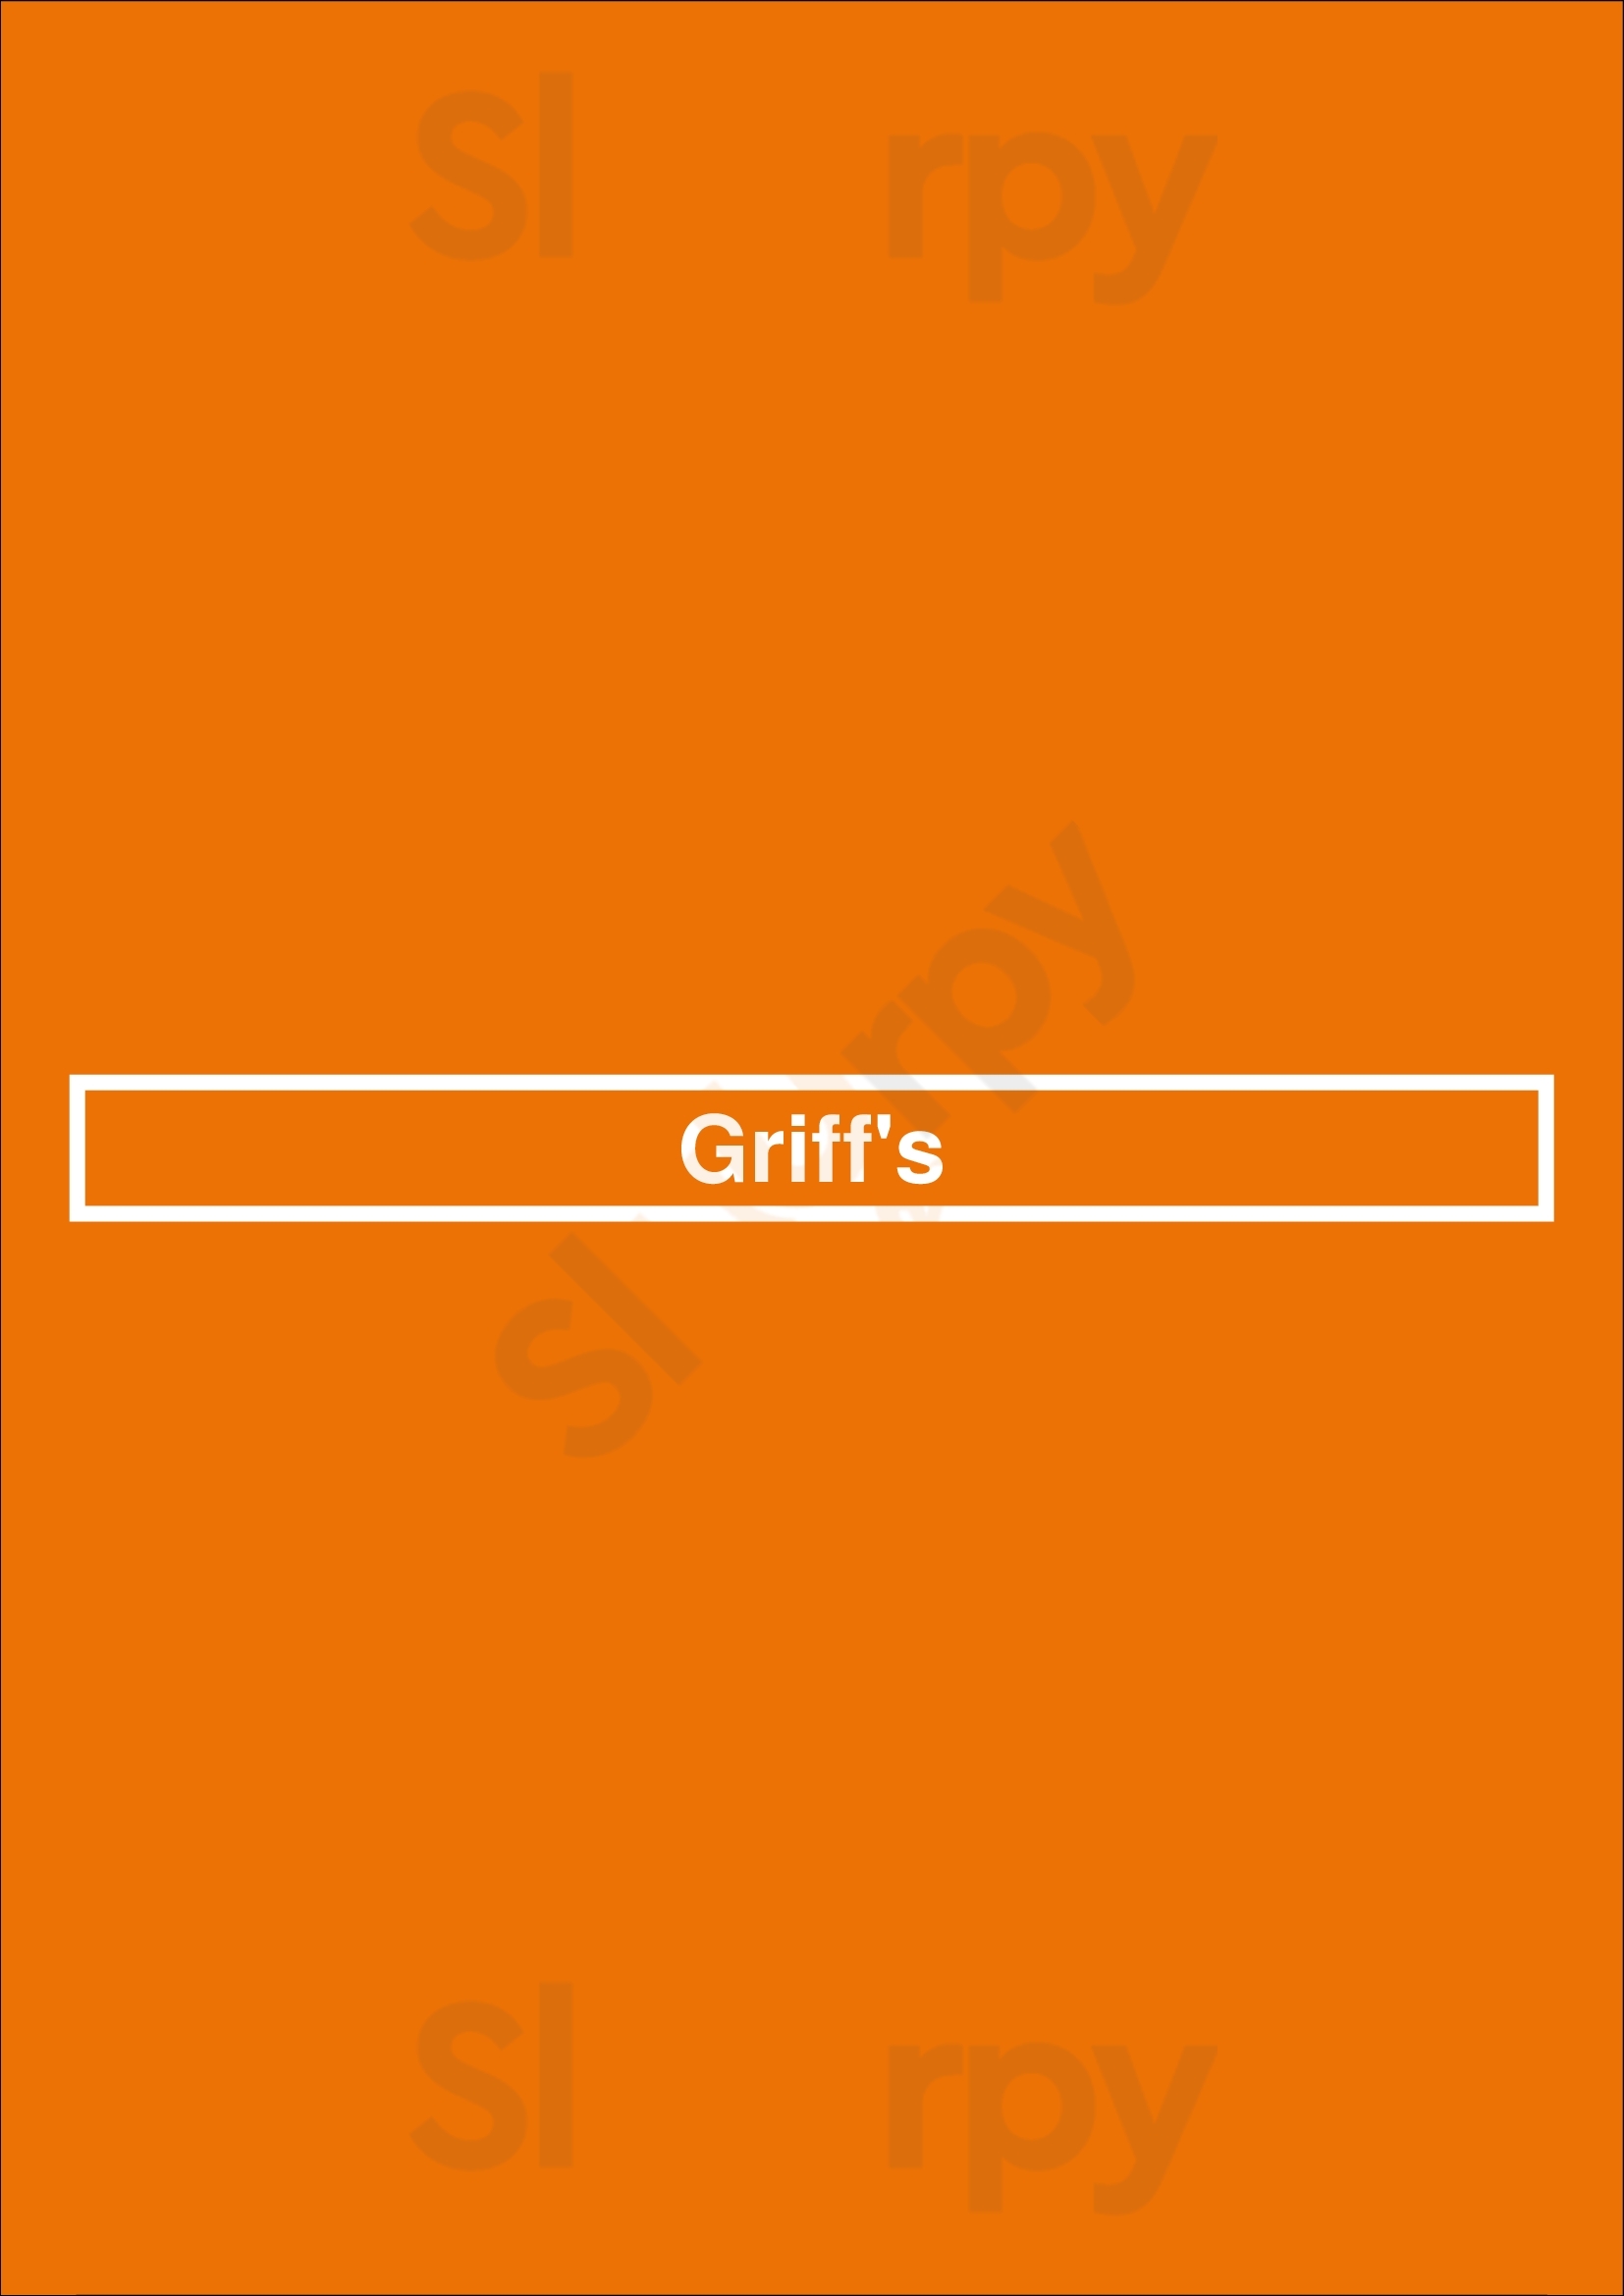 Griff's Houston Menu - 1